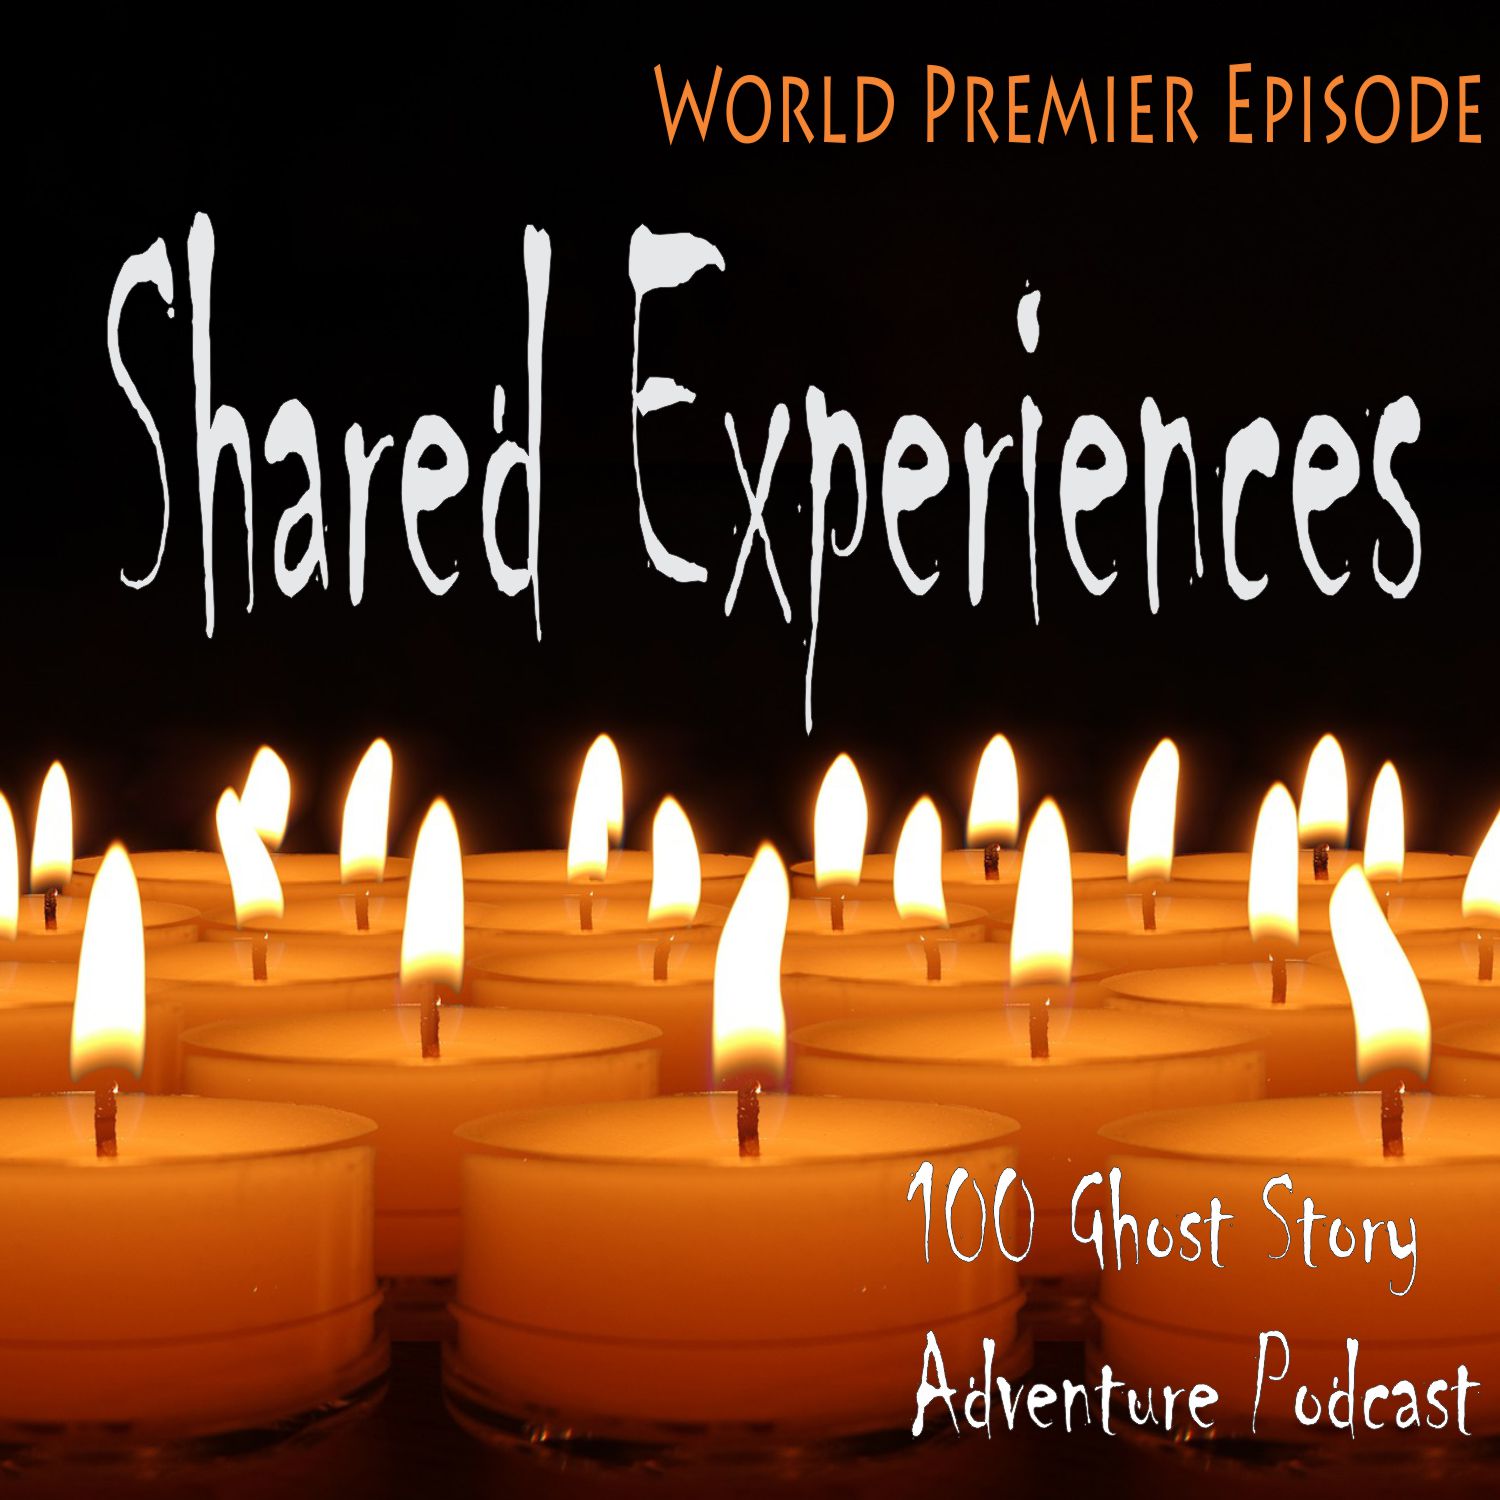 Premier Episode: Shared Experiences